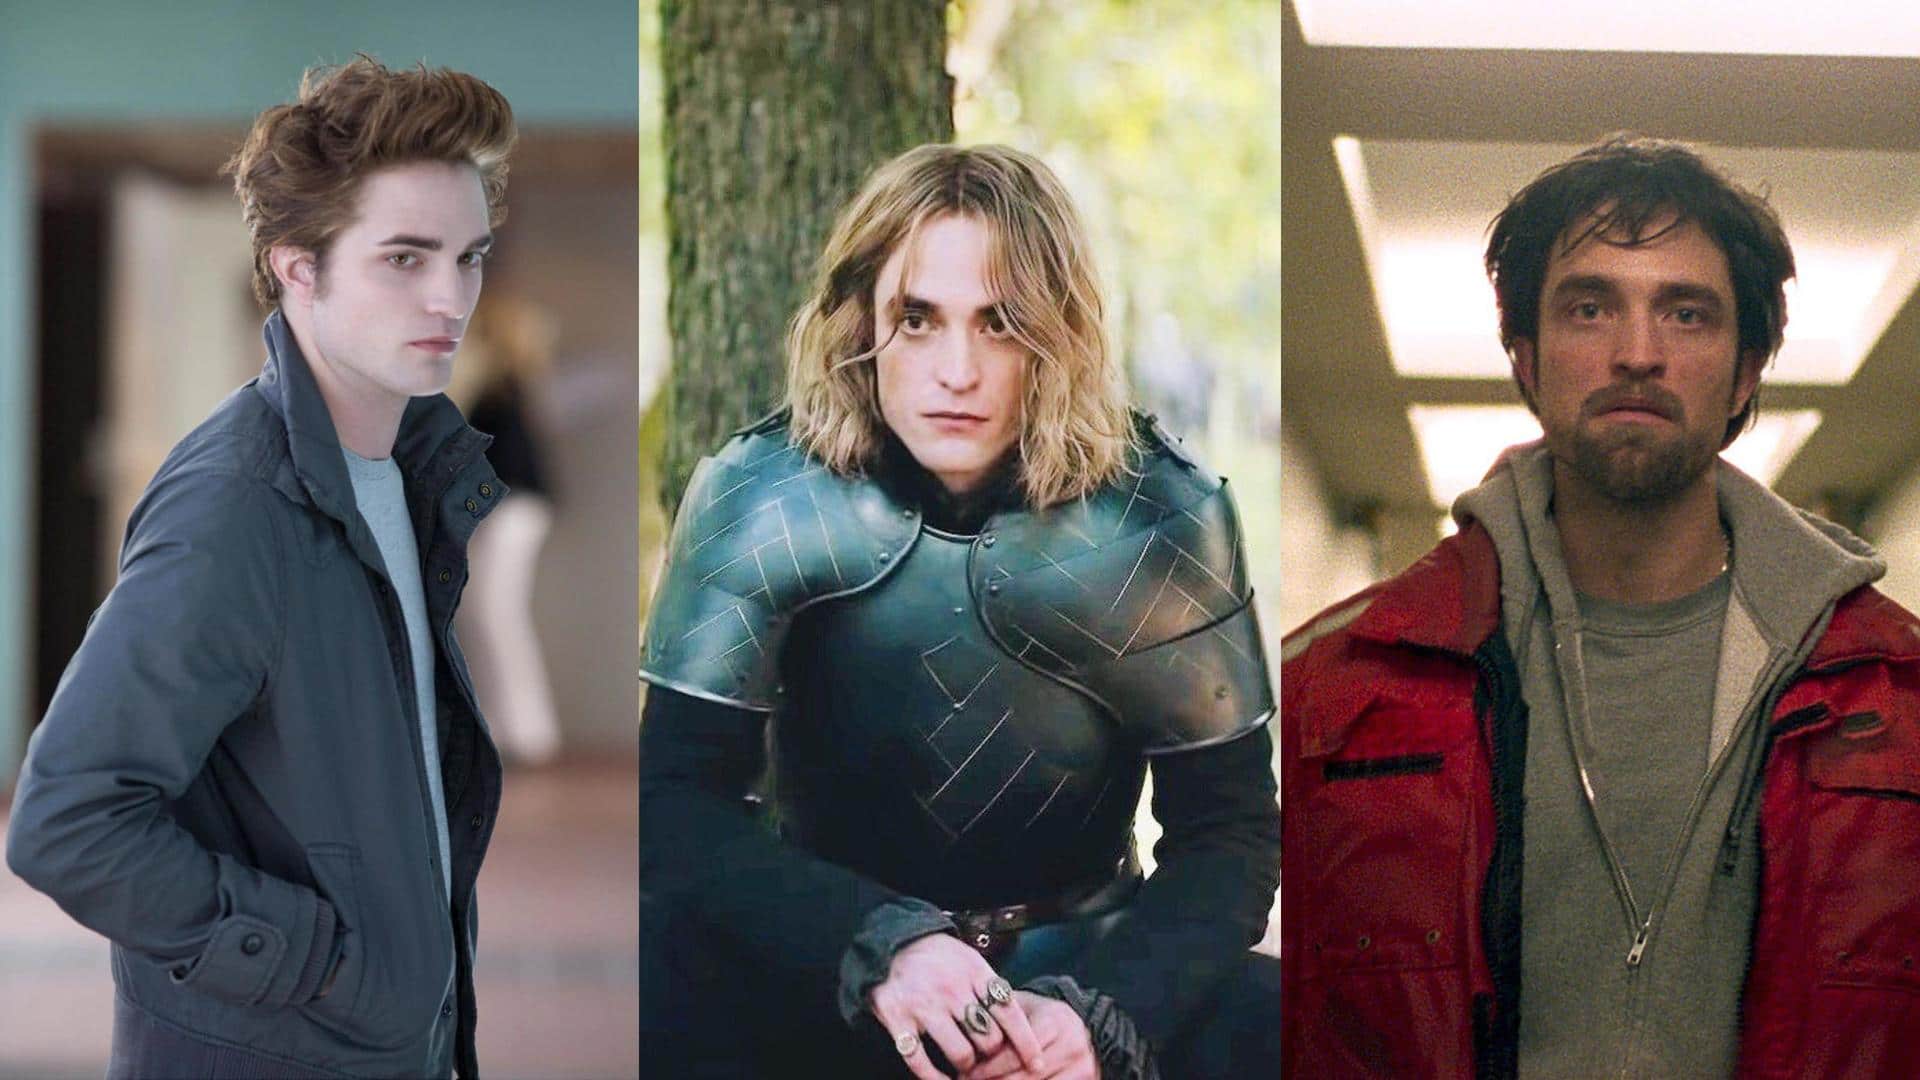 'Twilight' star Robert Pattinson's best performances you can't miss